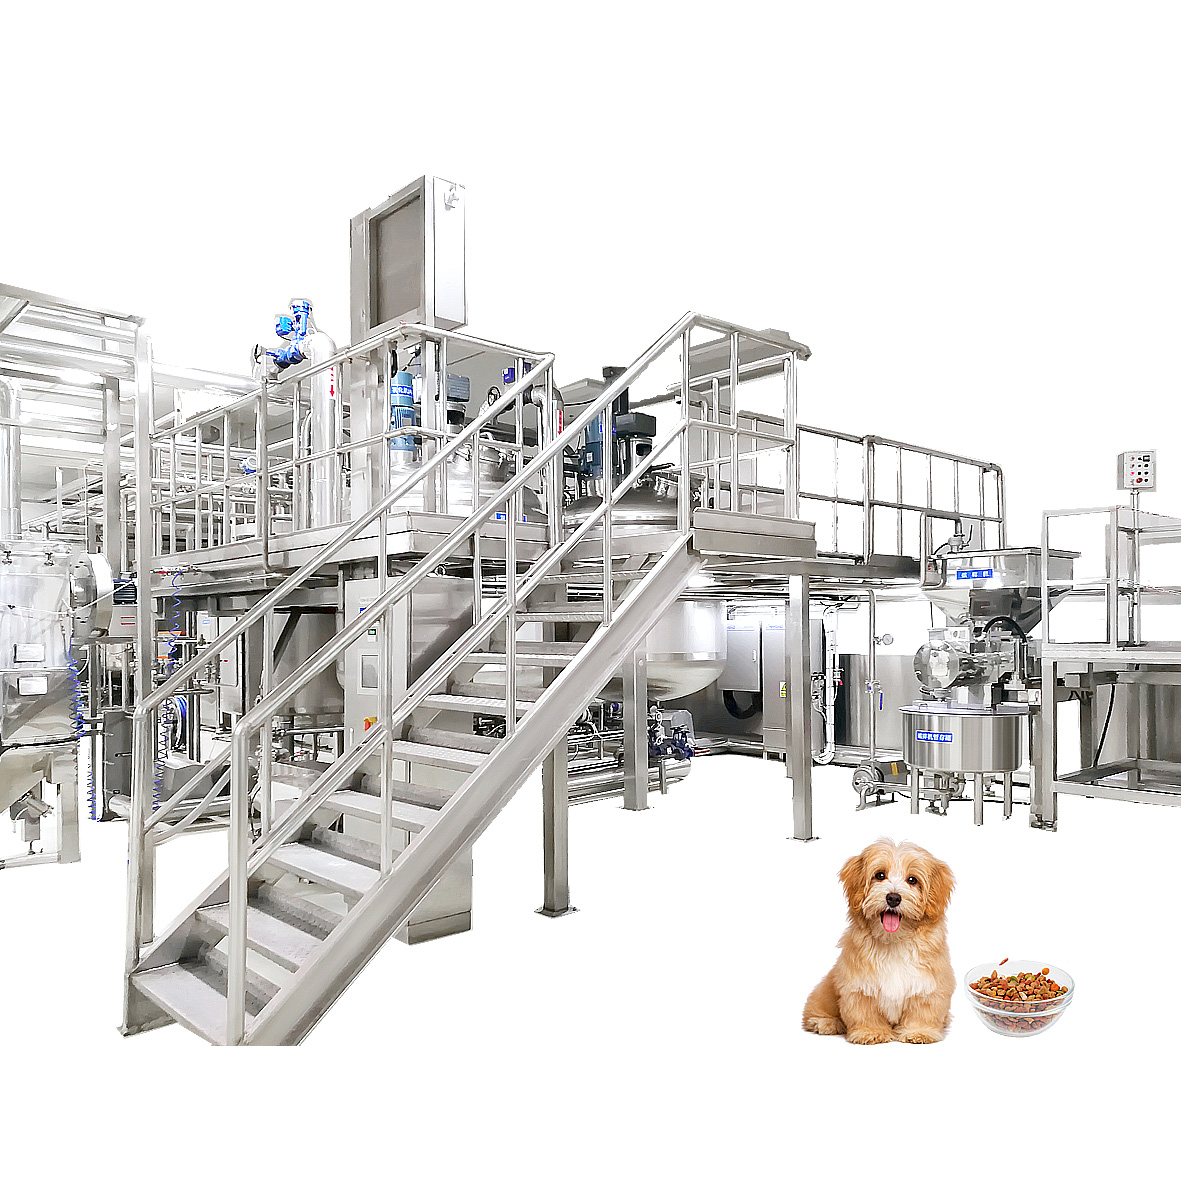 Línea de producción de alimentos para mascotas